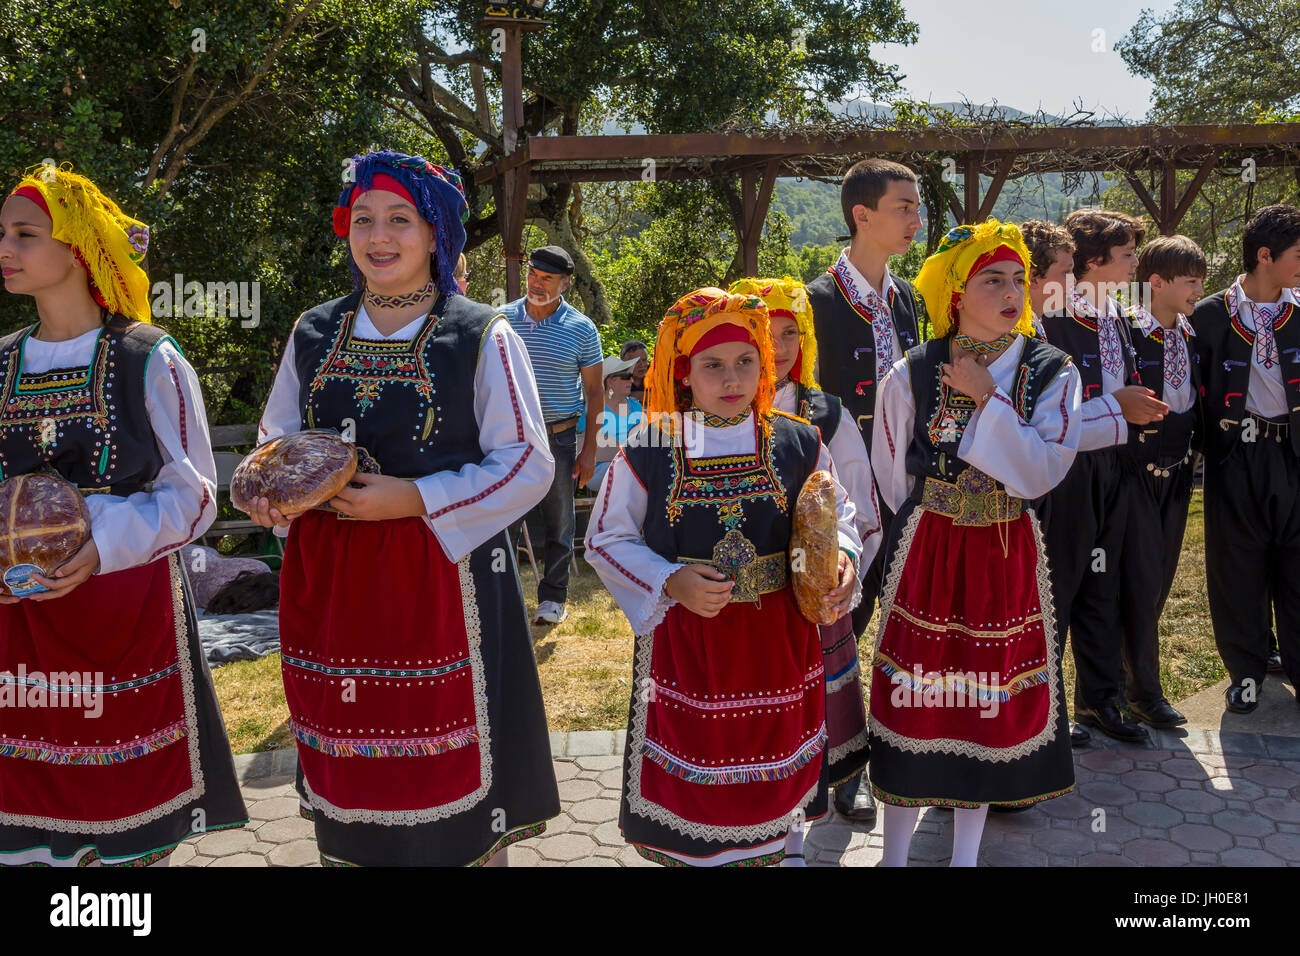 Greek-American Greek-American filles, garçons, Greek Folk Dancers, costumes traditionnels, Festival Grec Marin, ville de Novato, comté de Marin, en Californie Banque D'Images